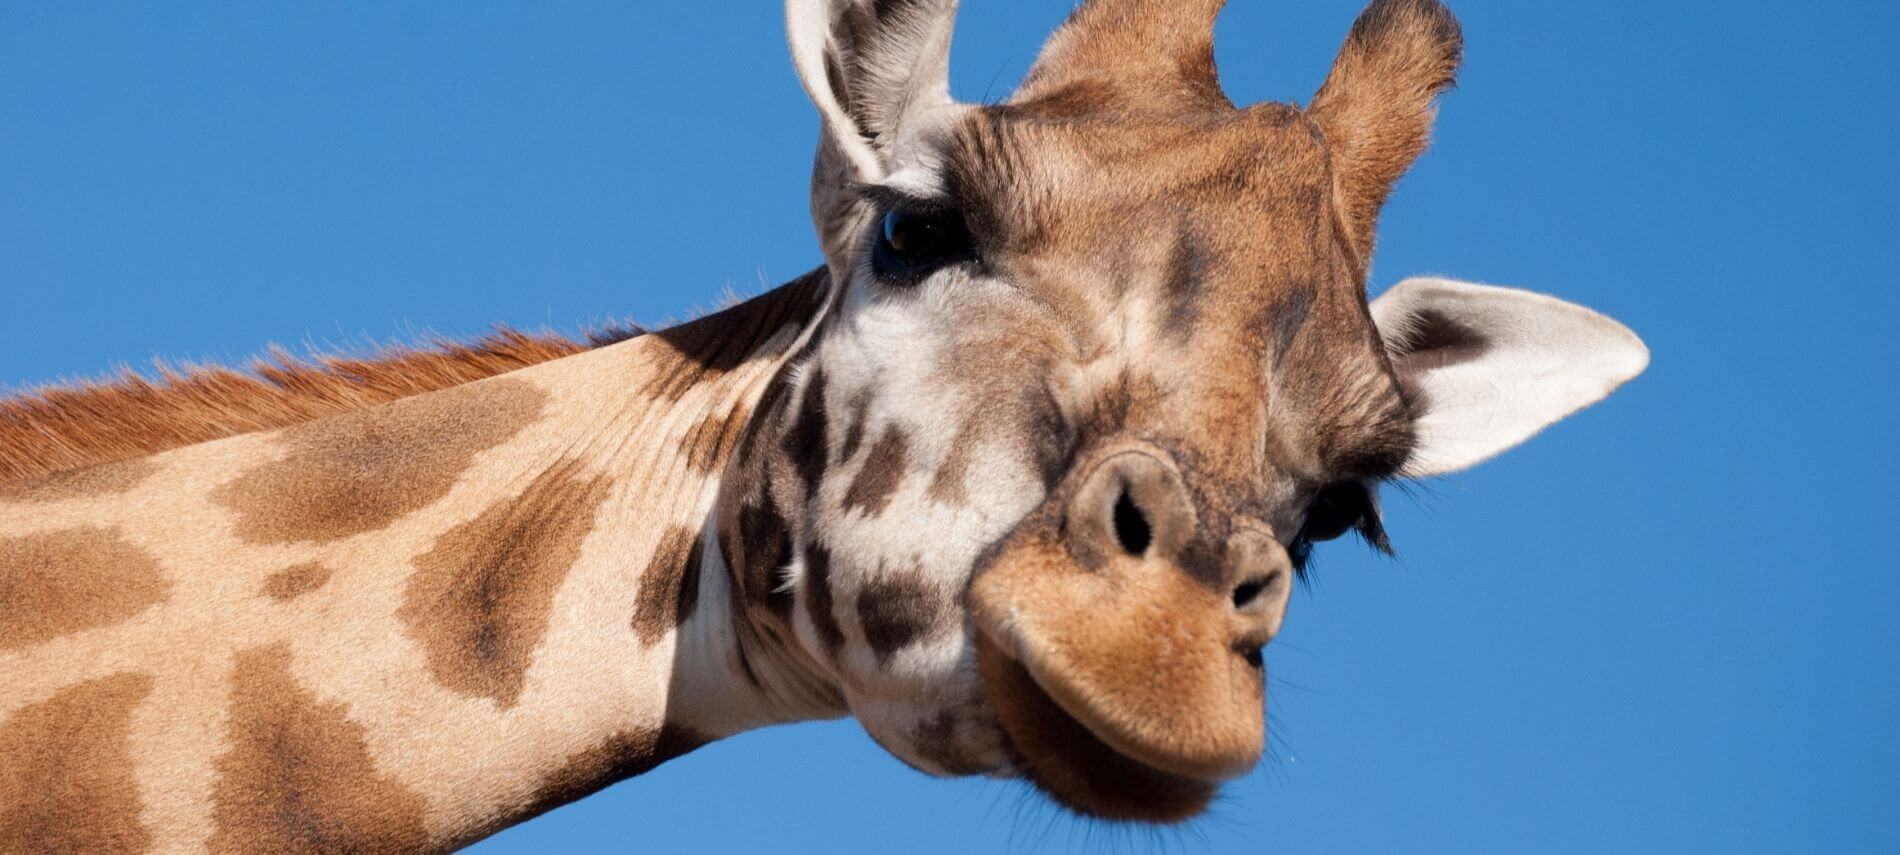 Closeup of giraffe's face